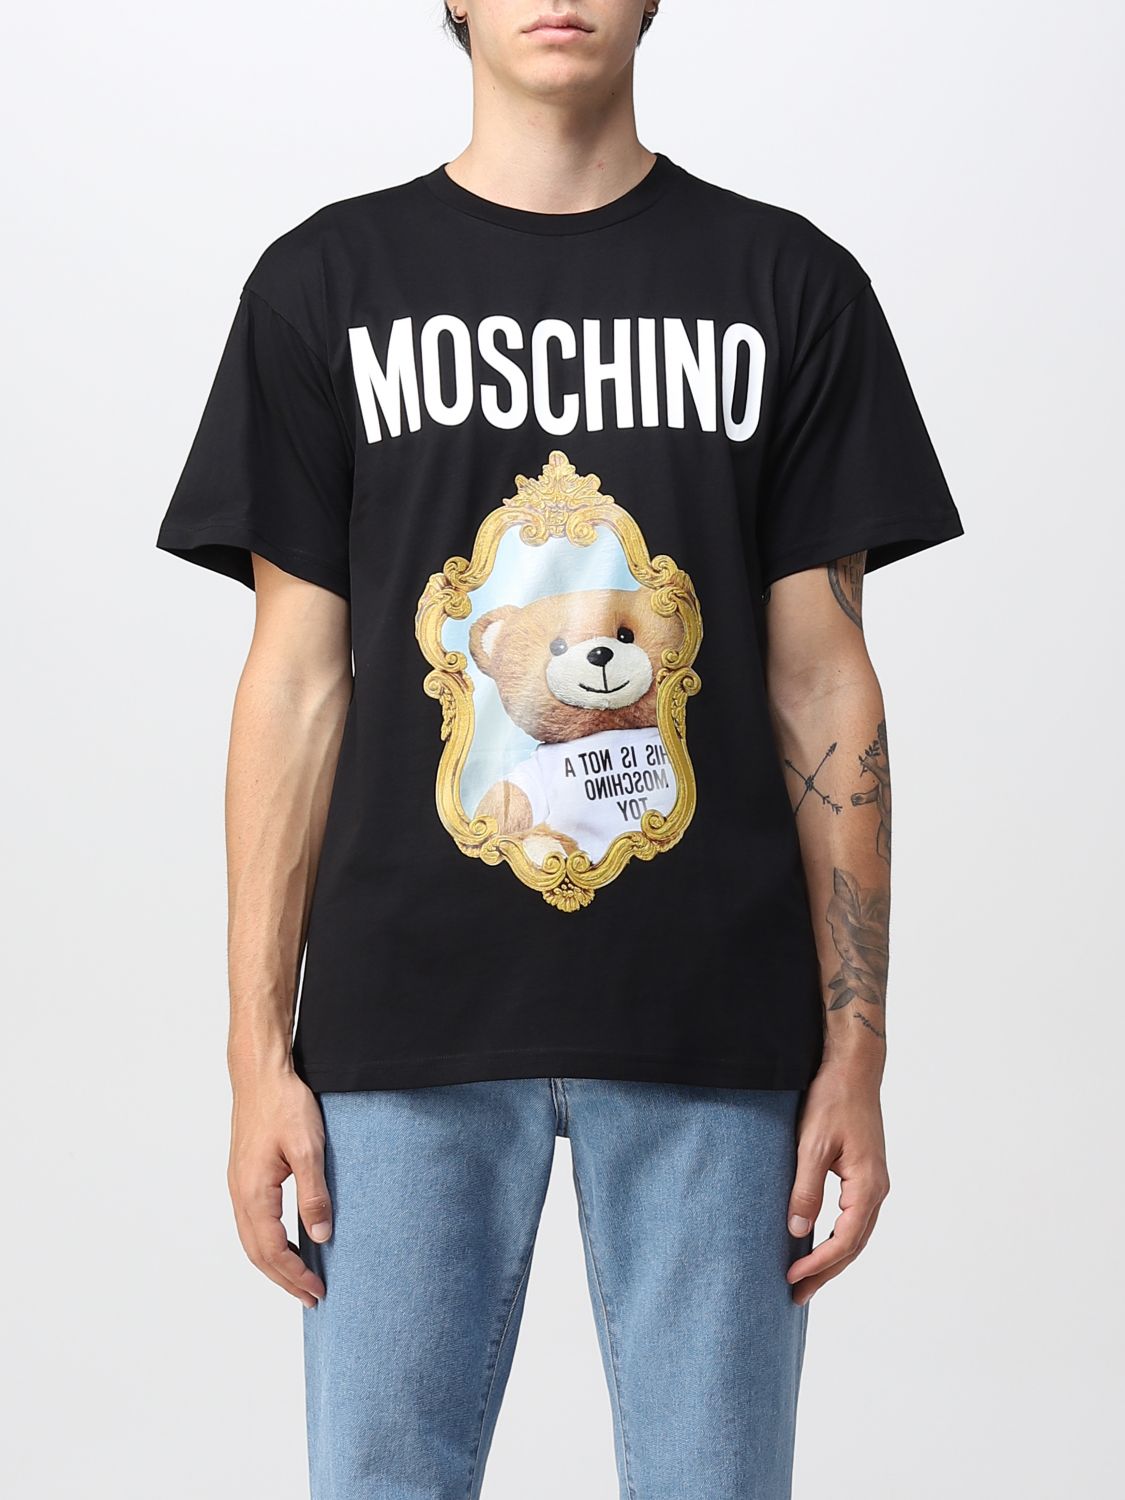 MOSCHINO COUTURE: men's t-shirt - Black | Moschino Couture t-shirt ...